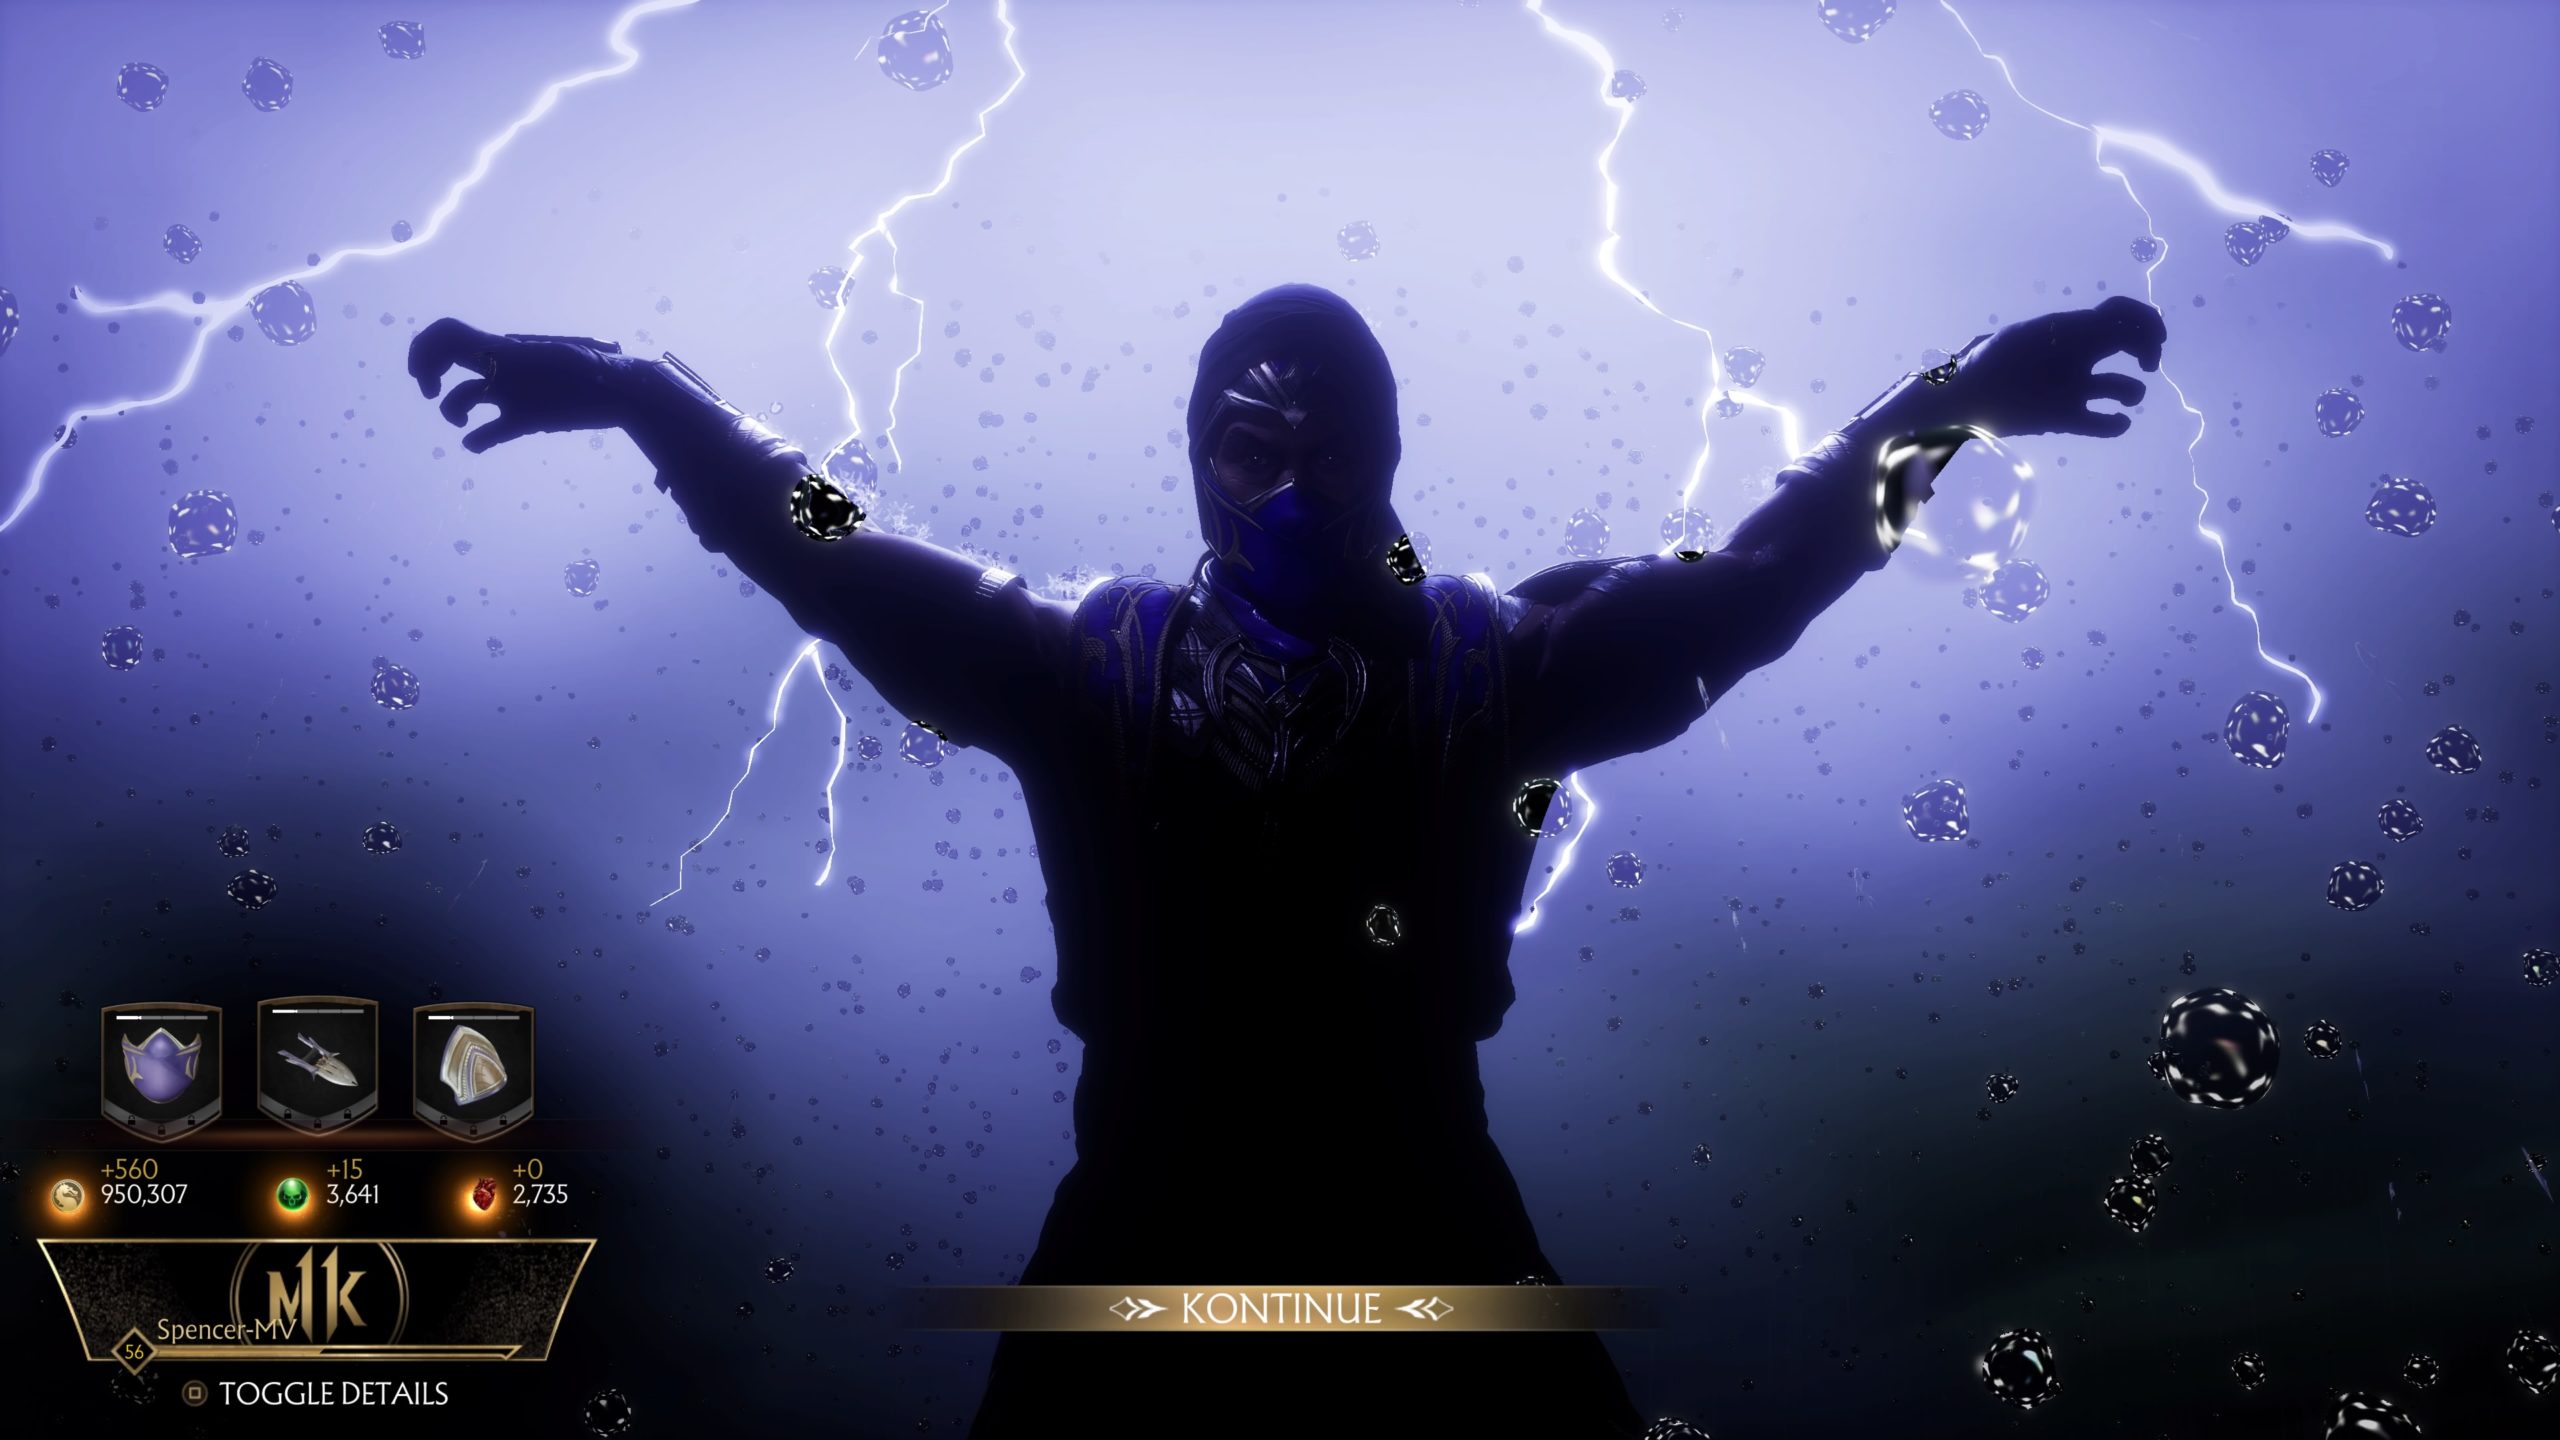 Mortal Kombat 11 Ultimate PlayStation 5 Review